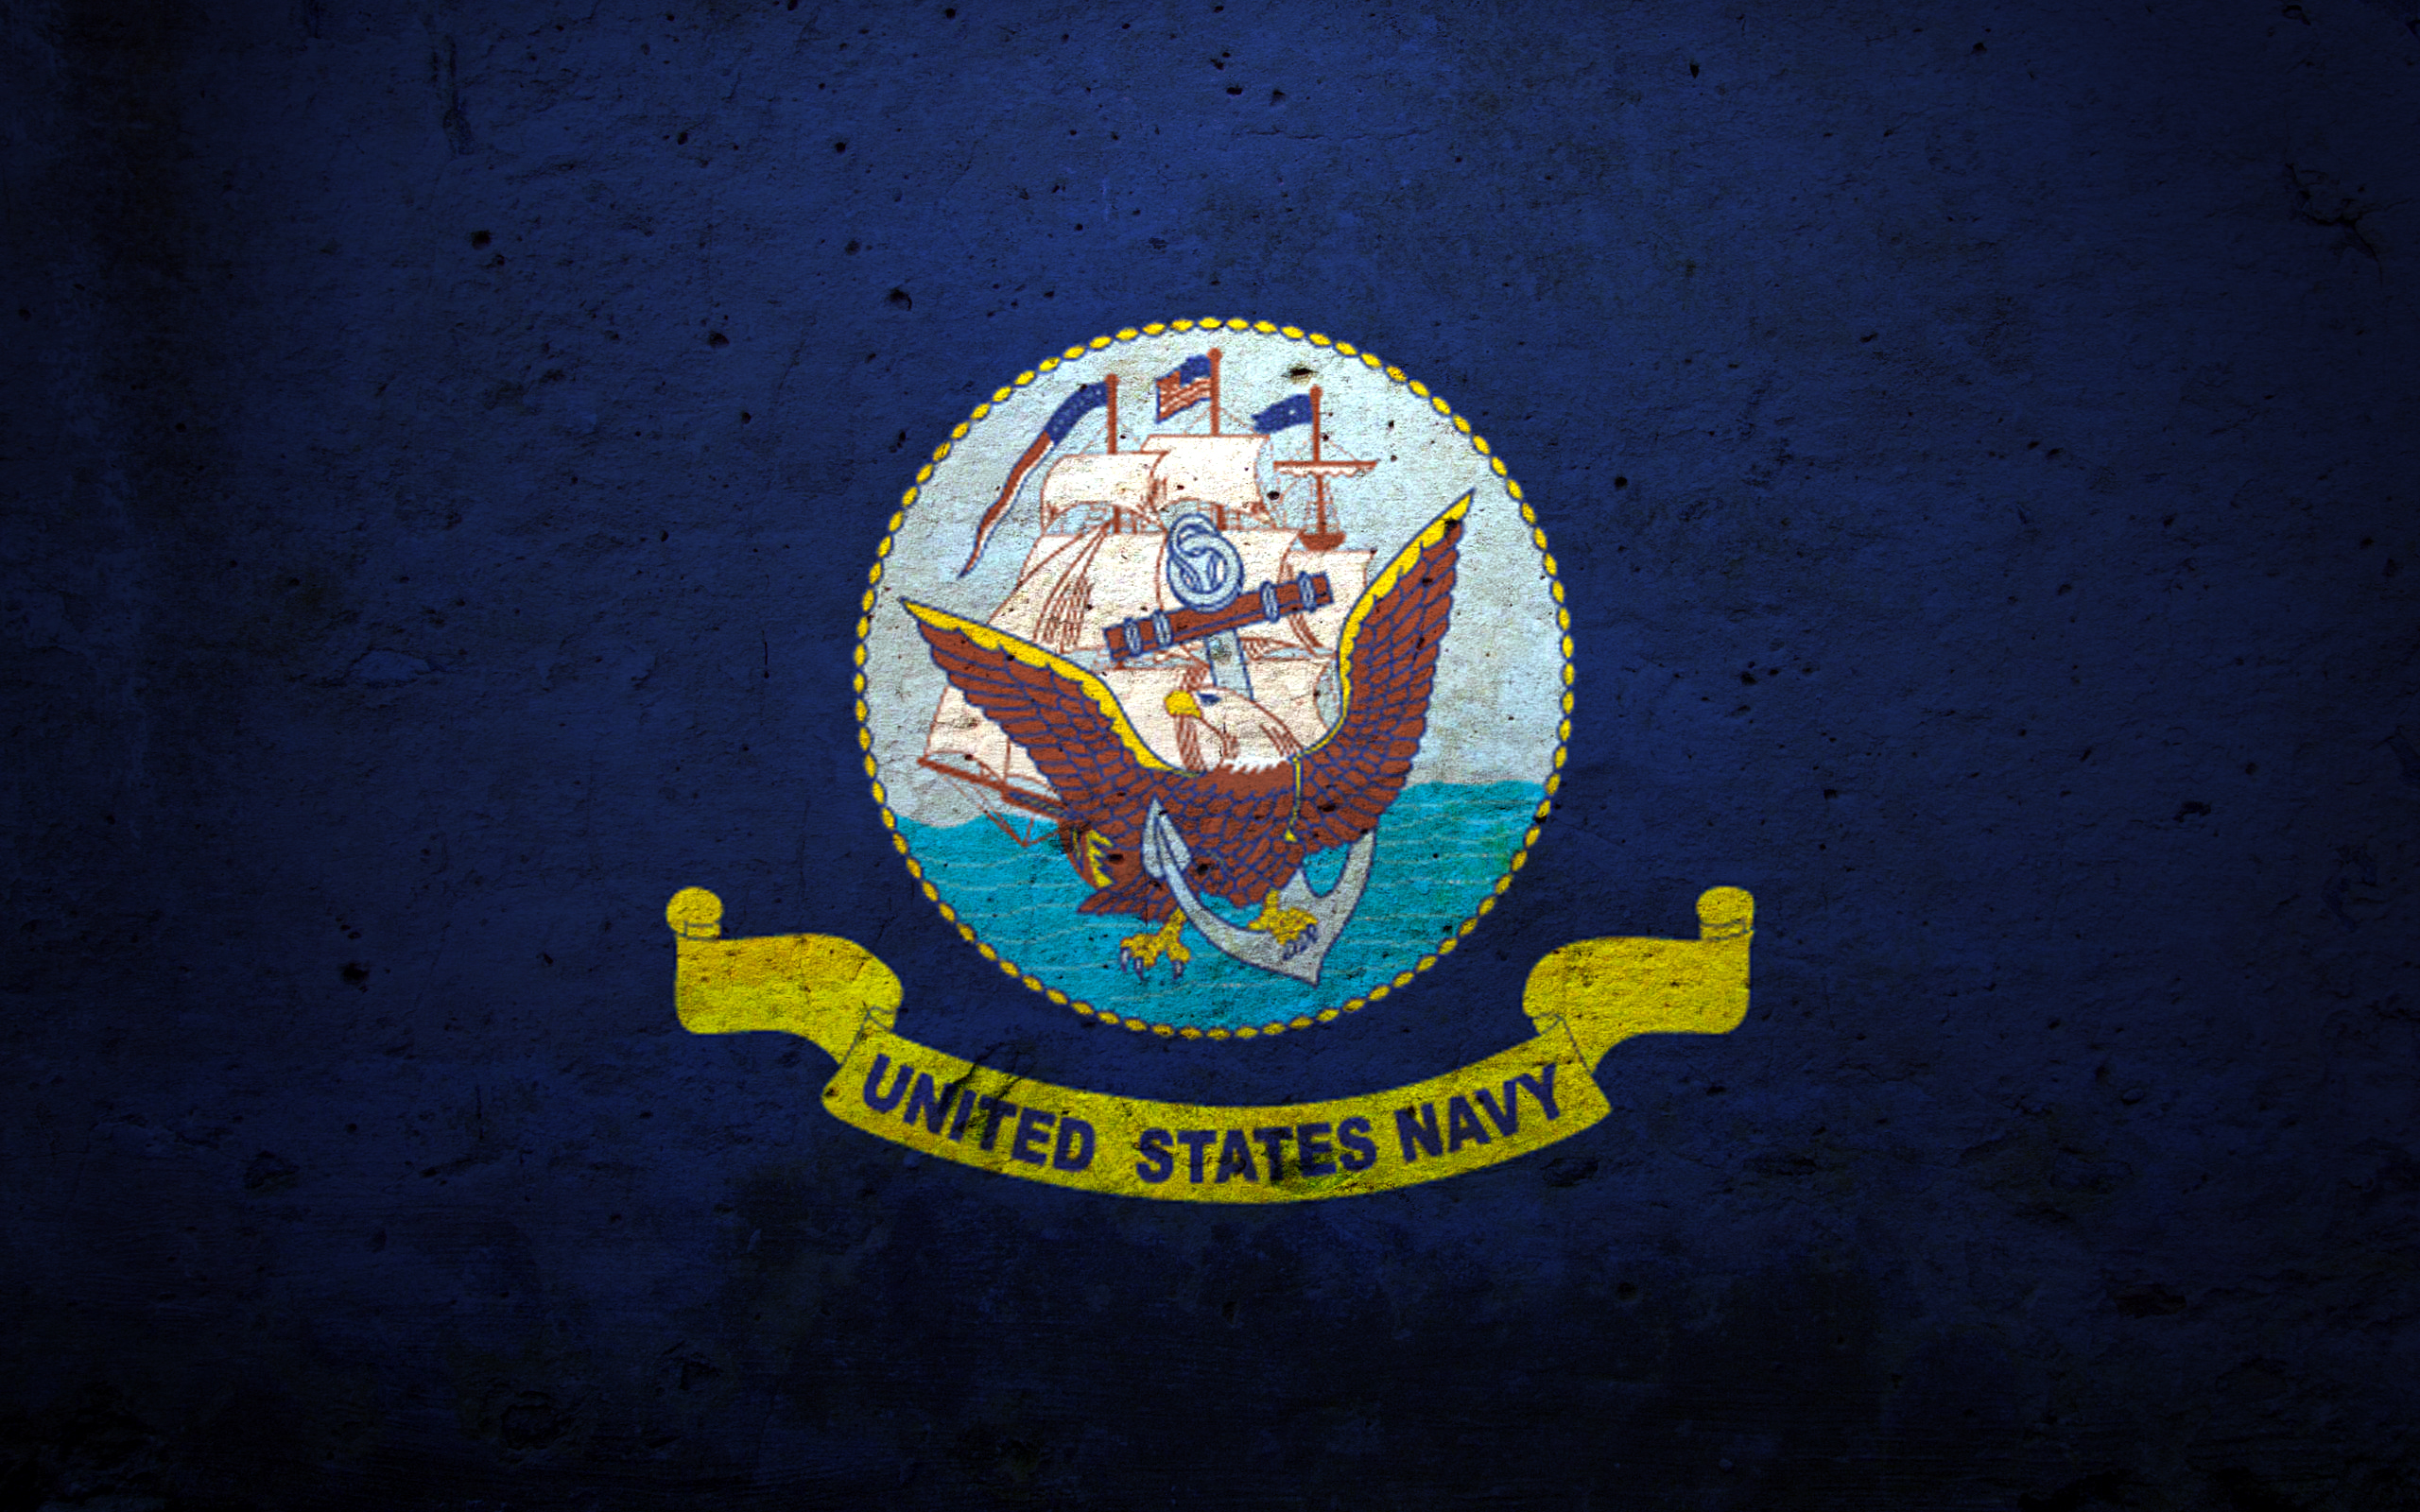 ВМС США, флаги - обои на рабочий стол